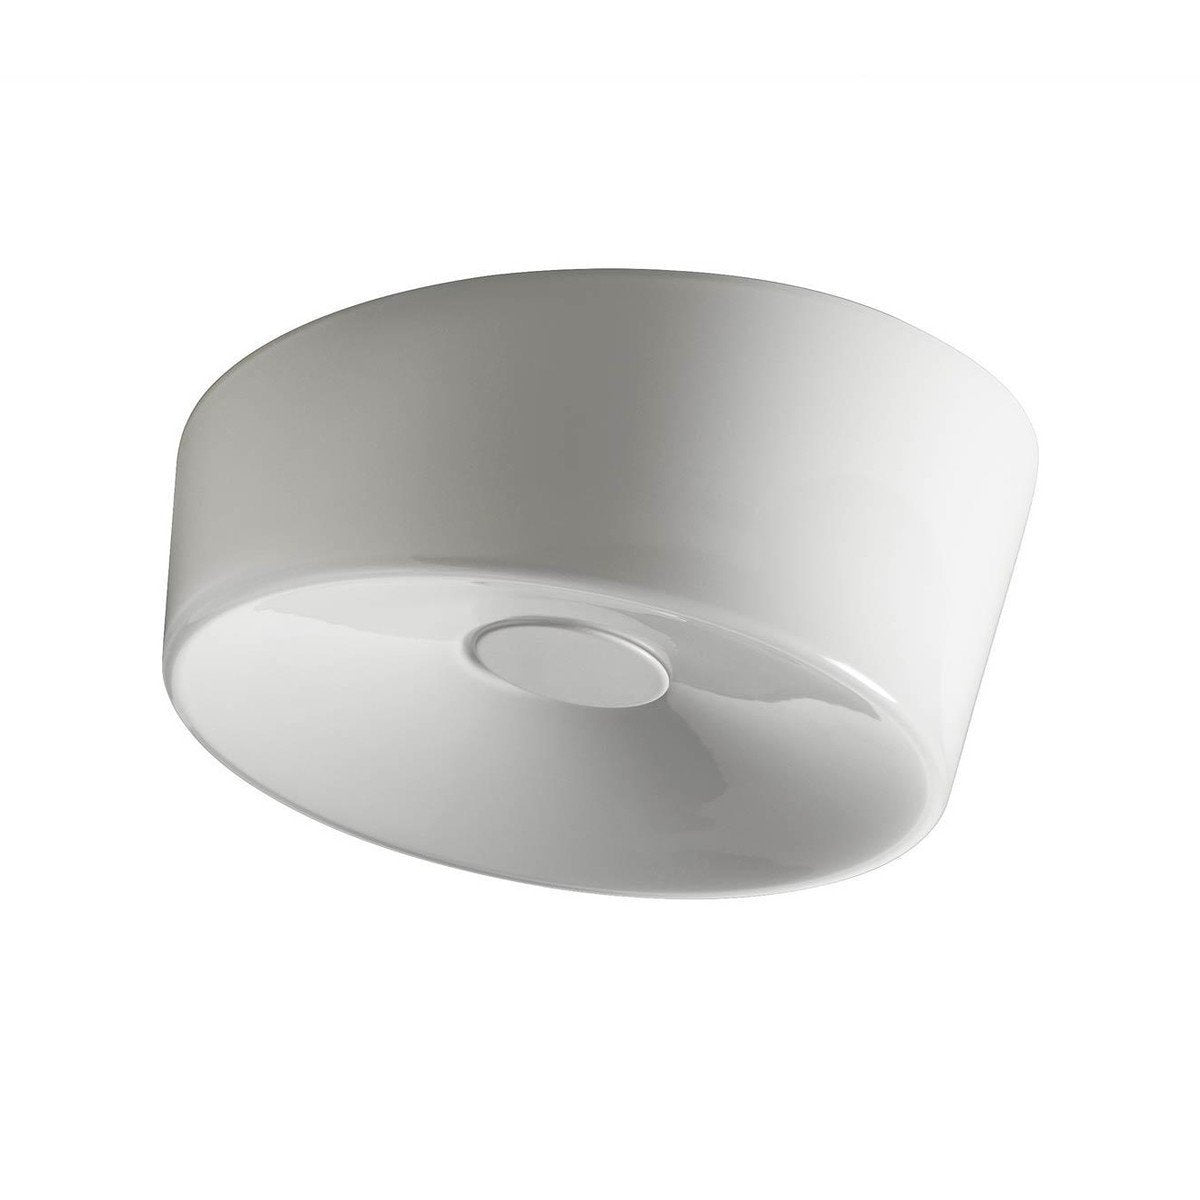 Foscarini - Lumiere LED plafondlamp / wandlamp Wit - KOOT